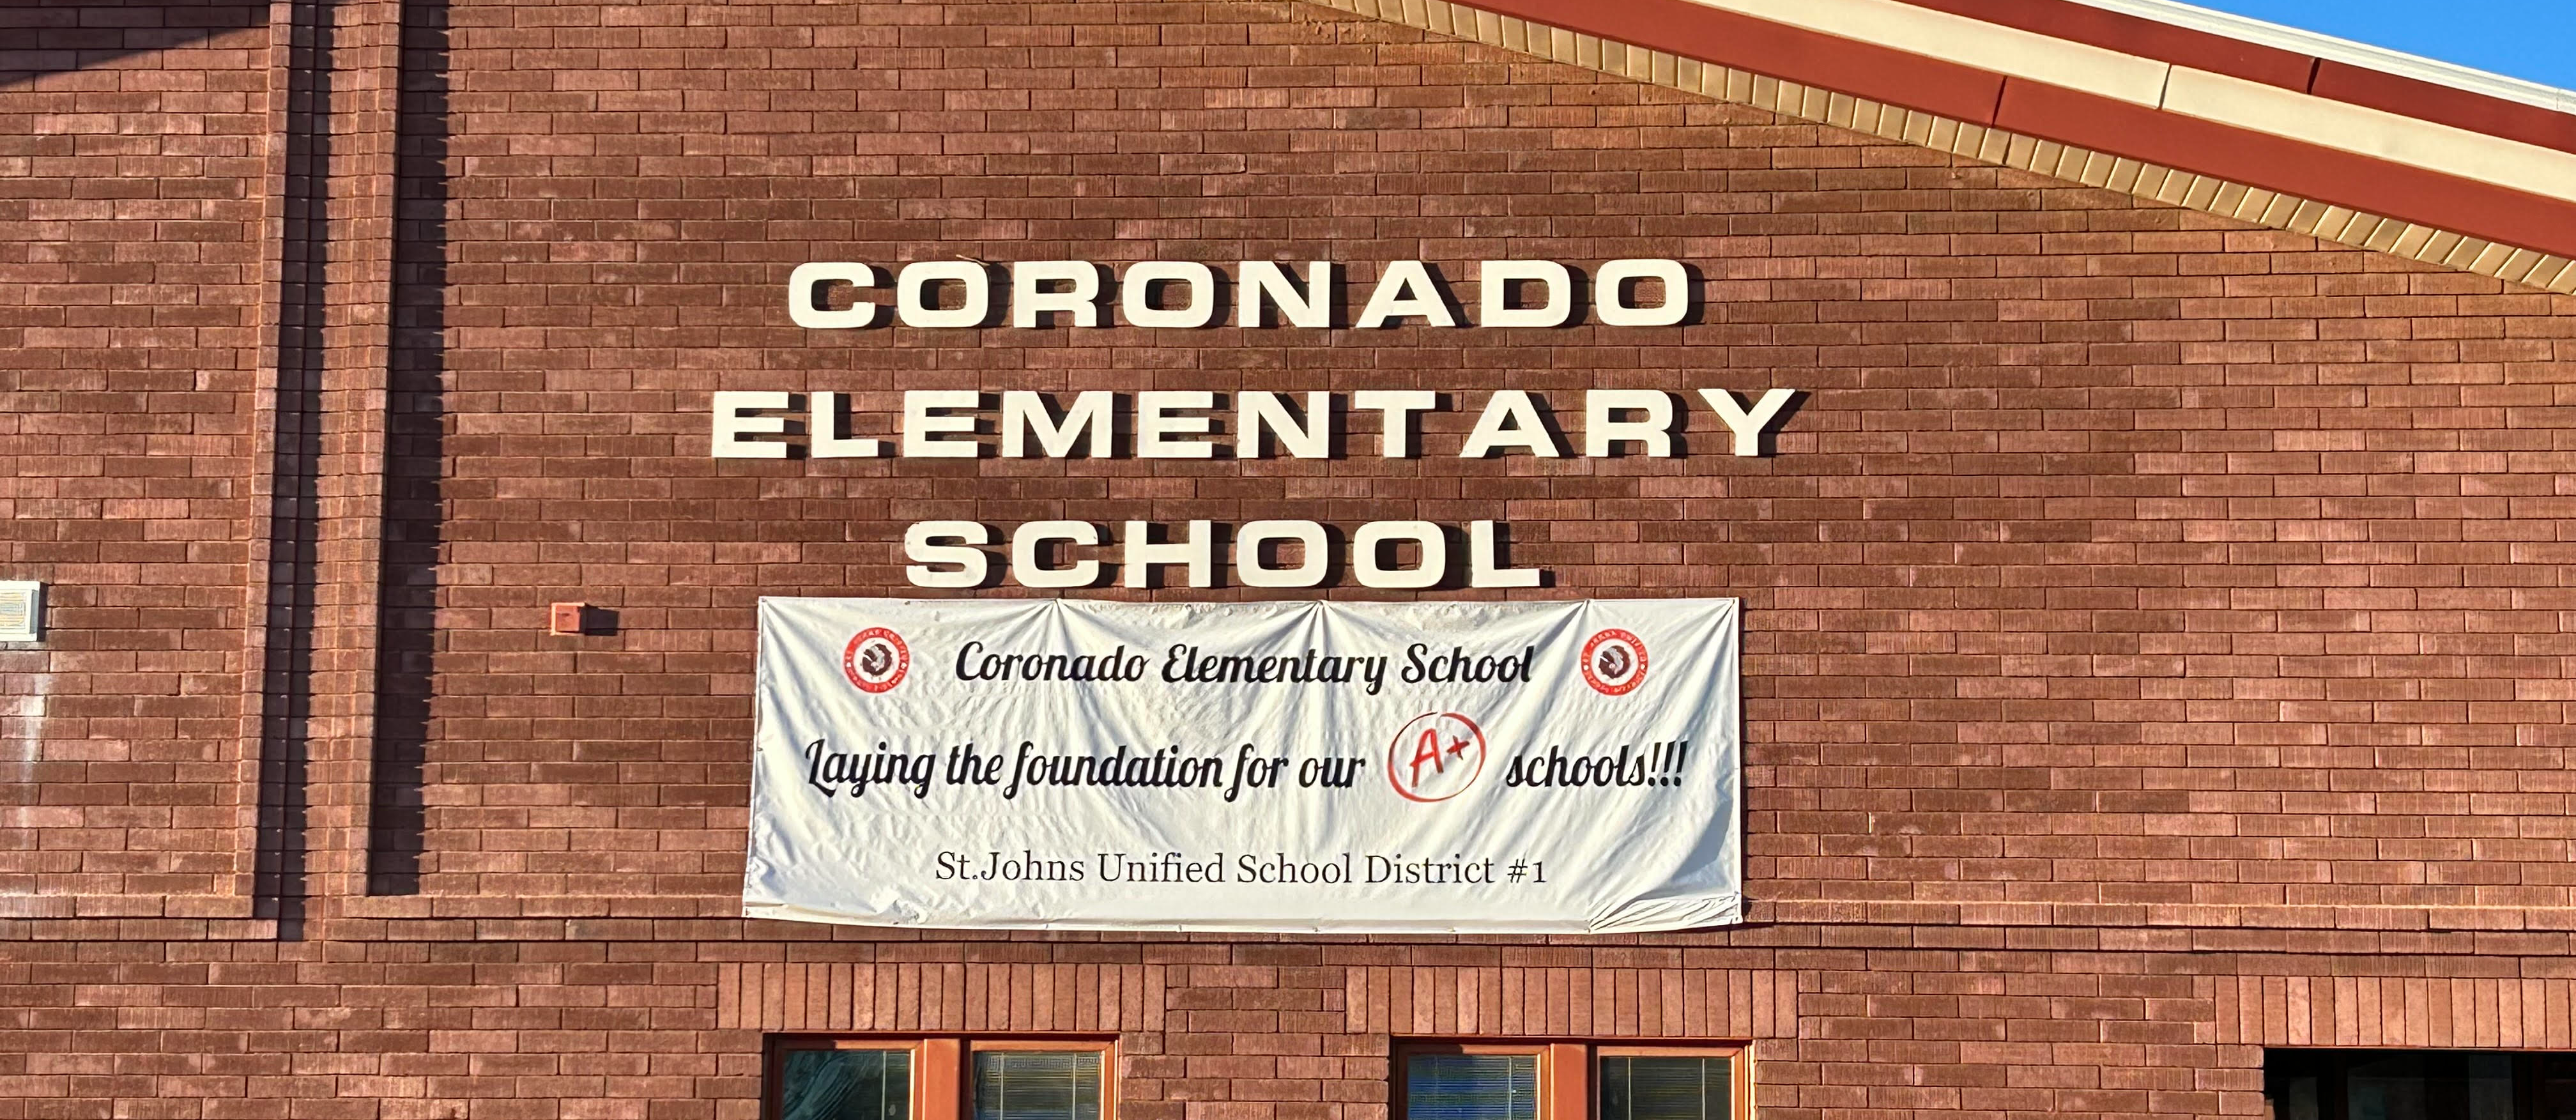 Coronado Elementary